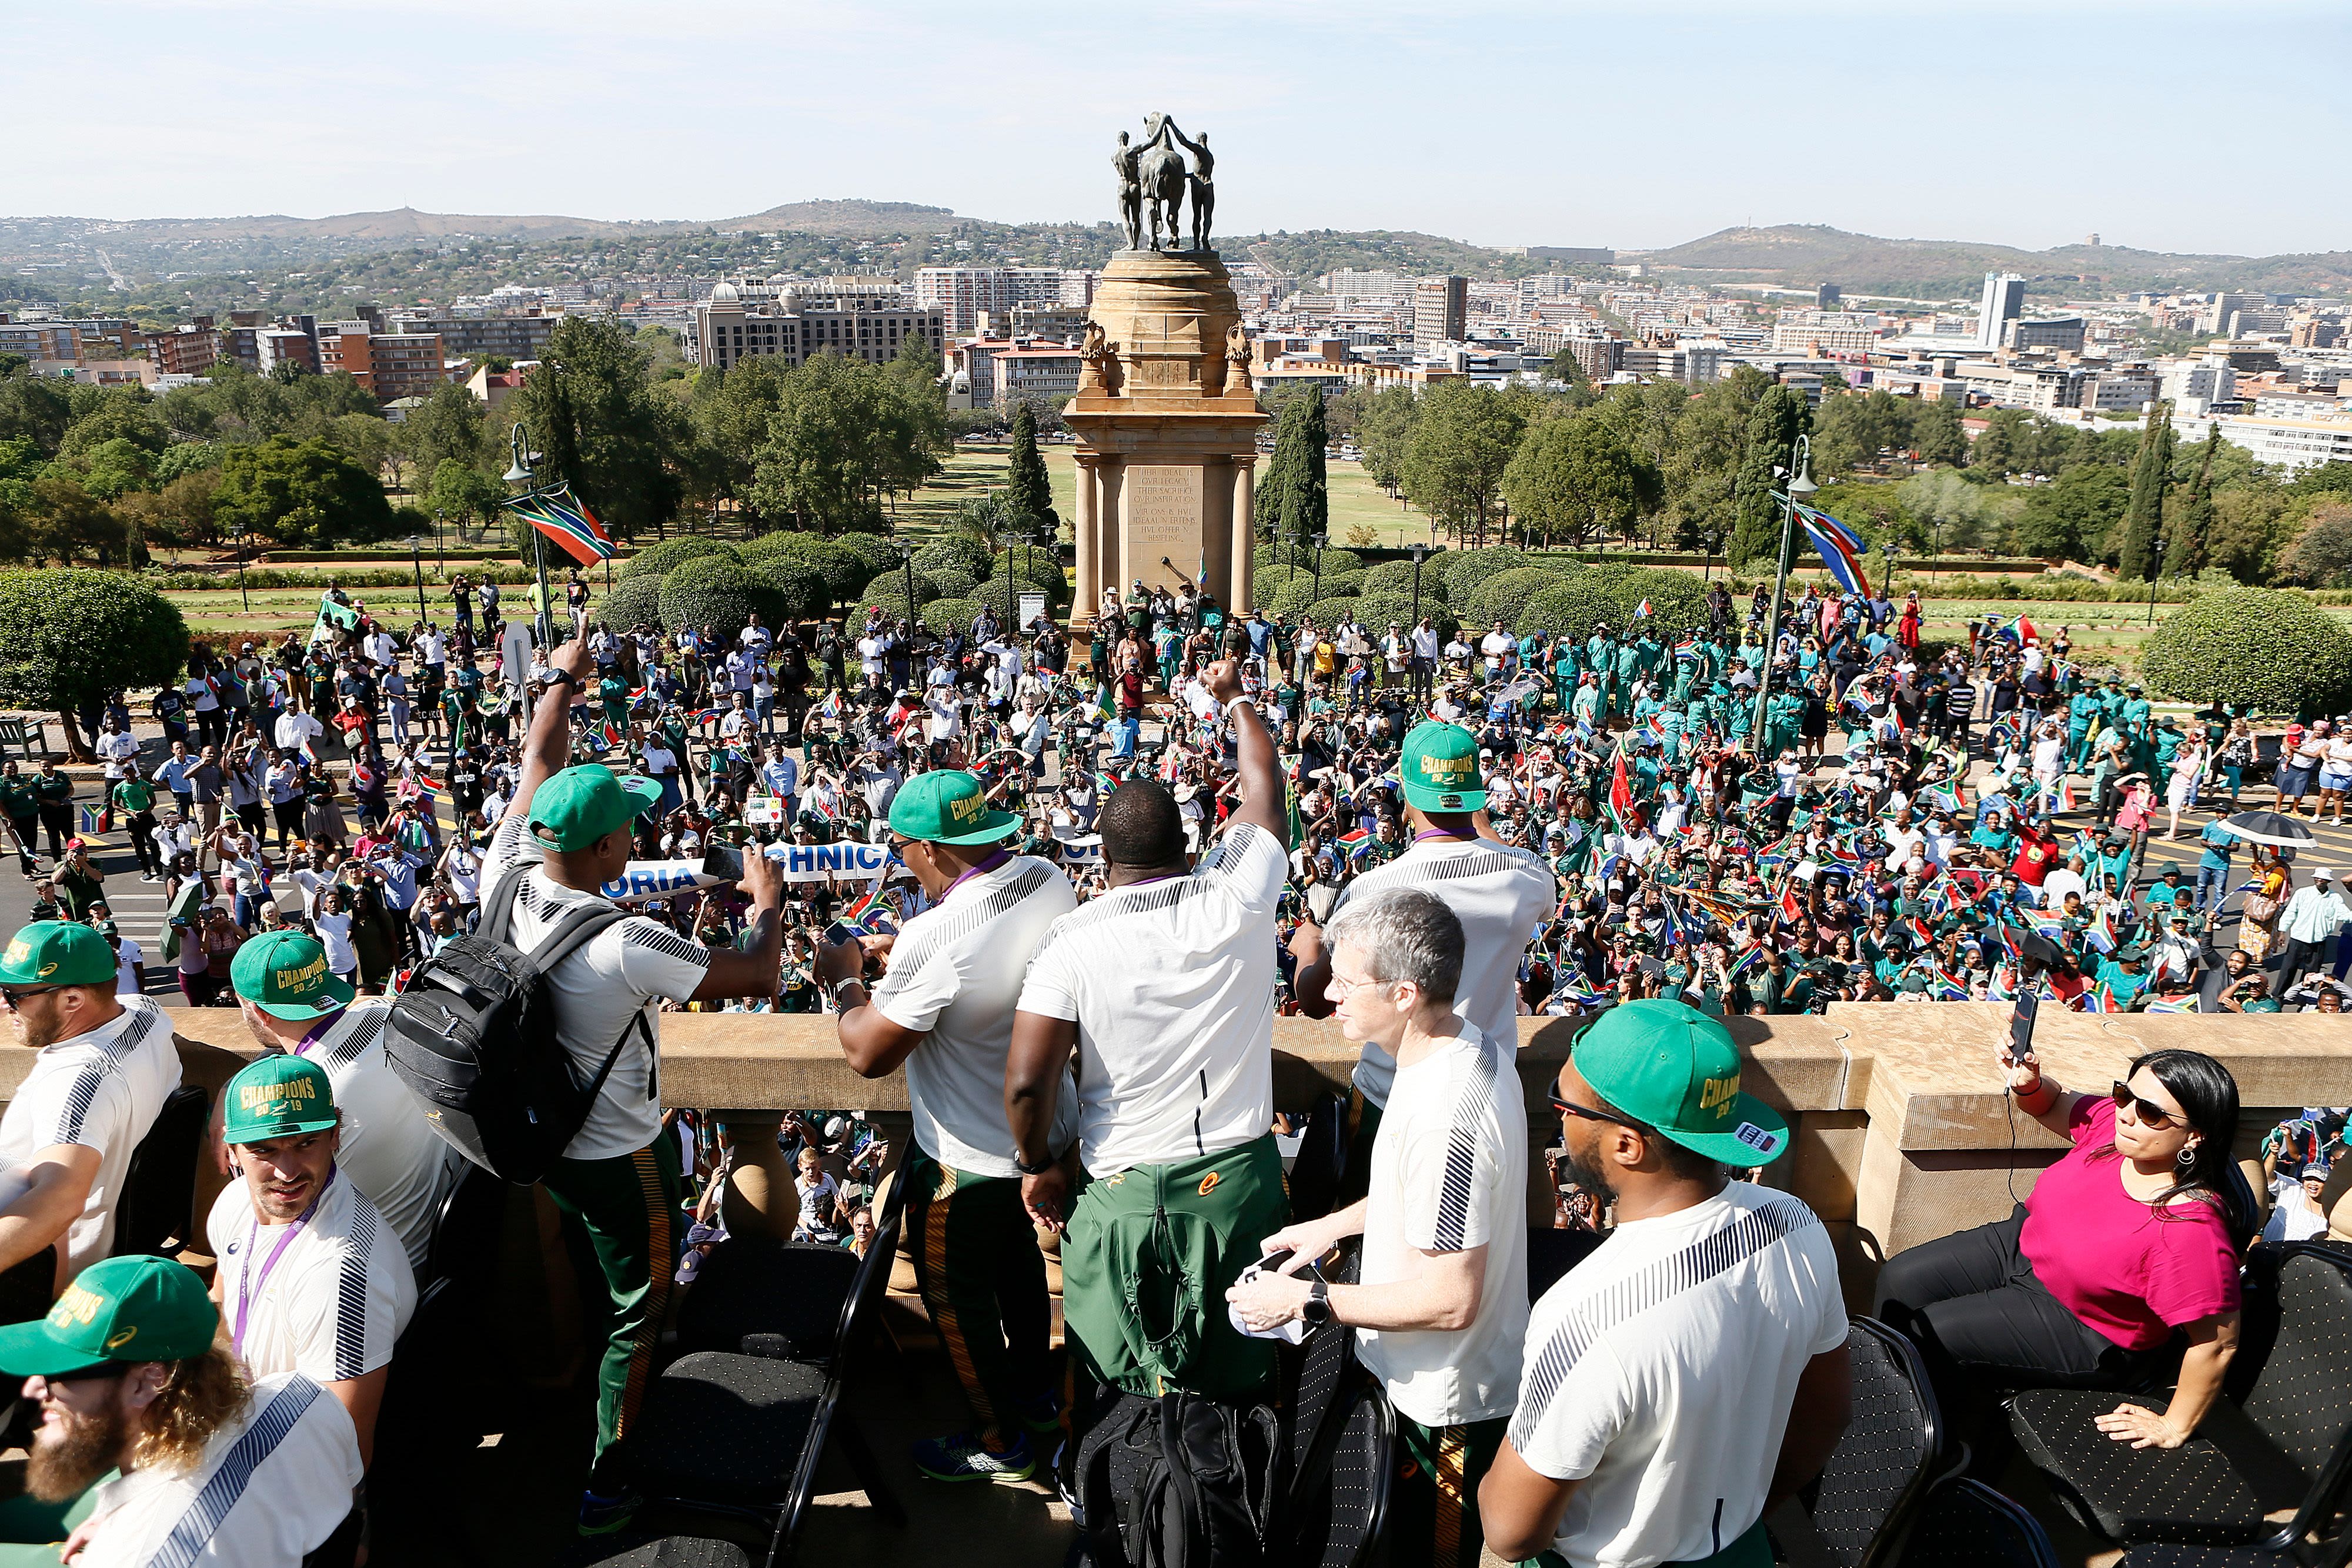 The Springboks bringing the party 🙌 #WorldRugbyAwards #RWC2023